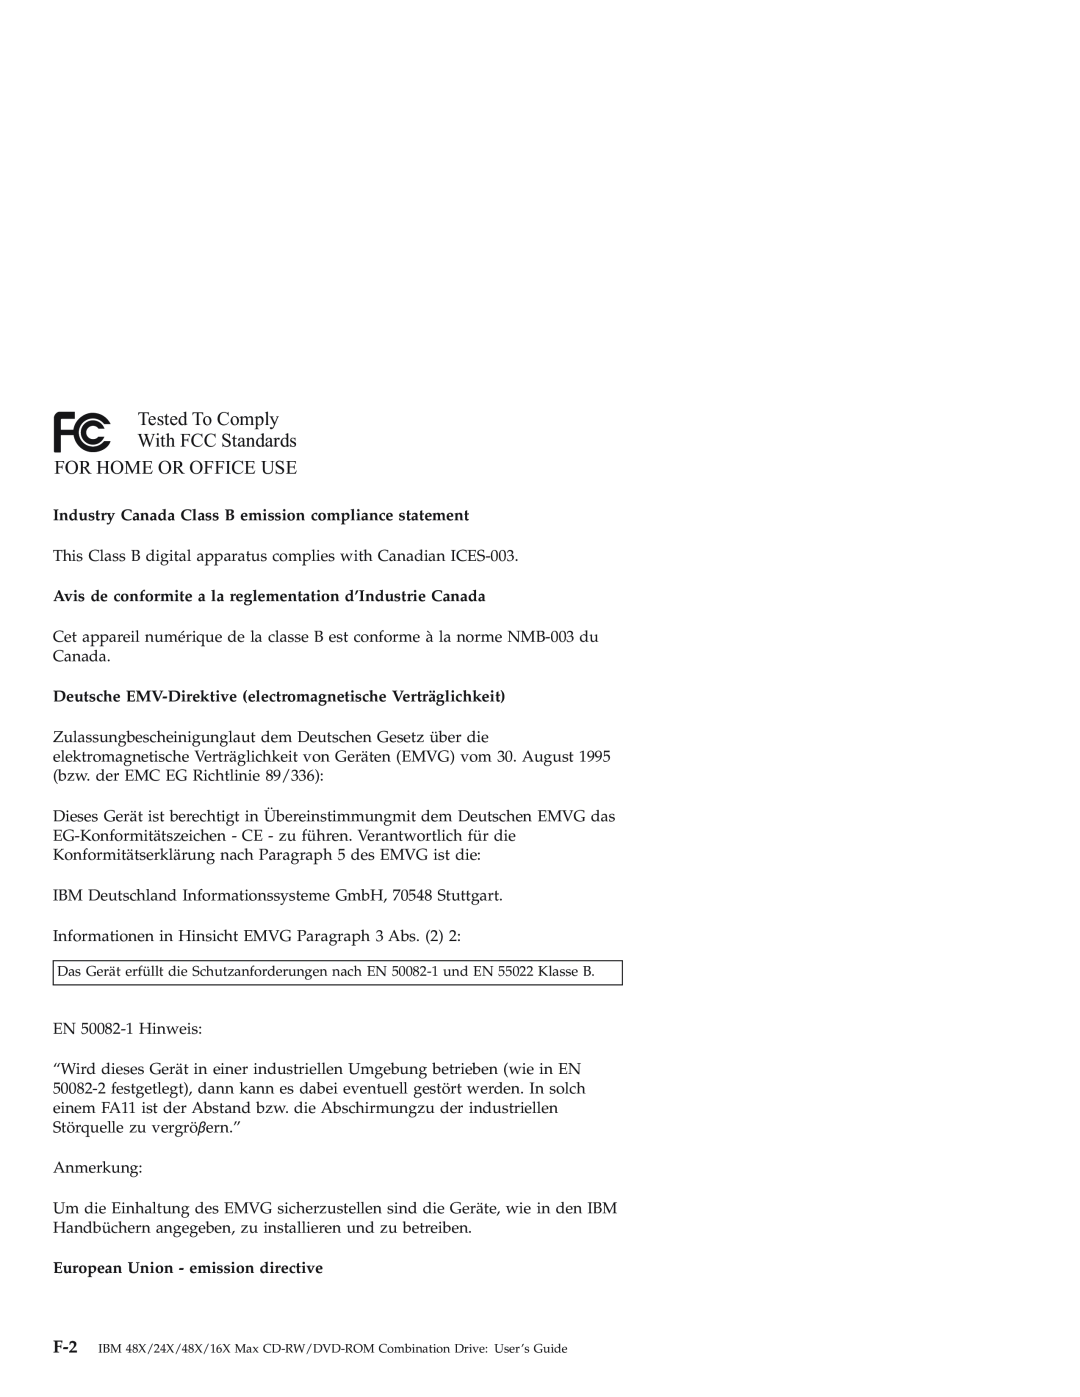 IBM 22P7035 manual Industry Canada Class B emission compliance statement, European Union - emission directive 